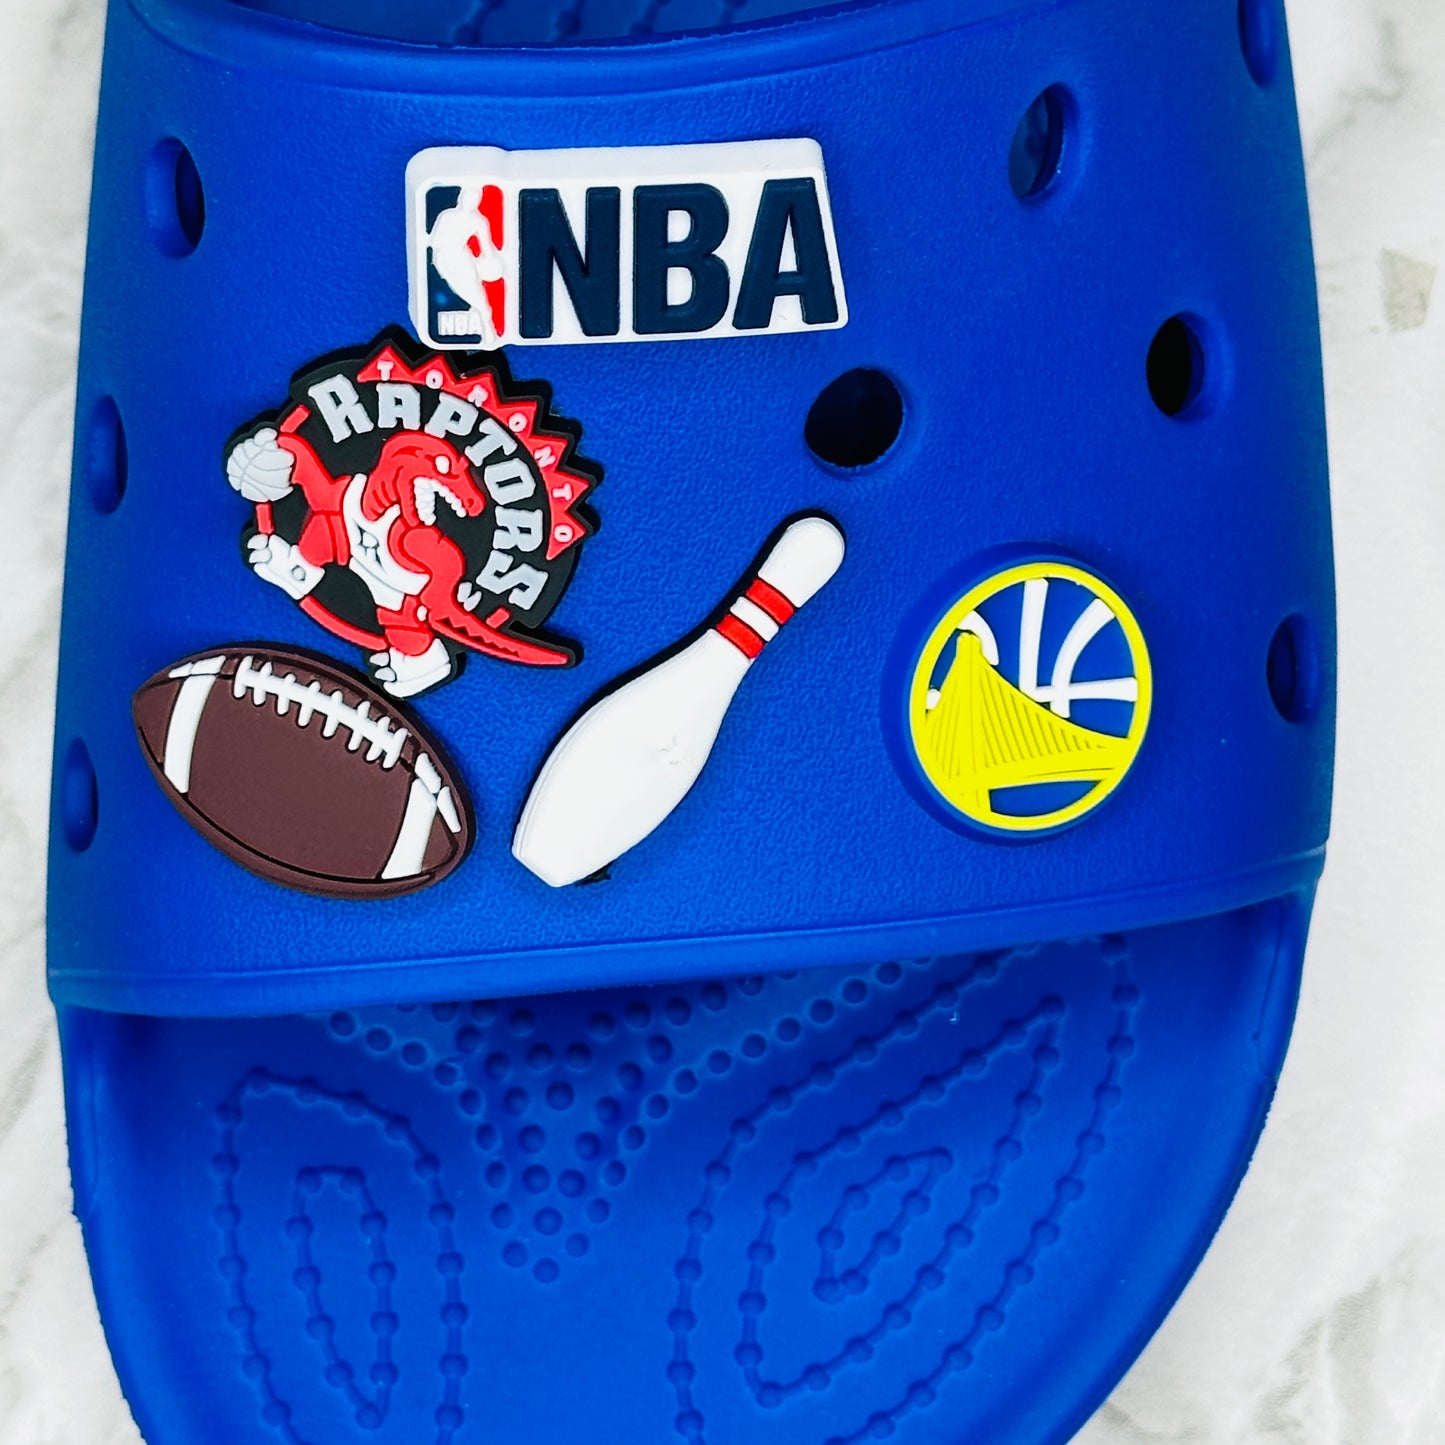 Basketball Teams Croc Shoe Charm| Sports Croc Charm